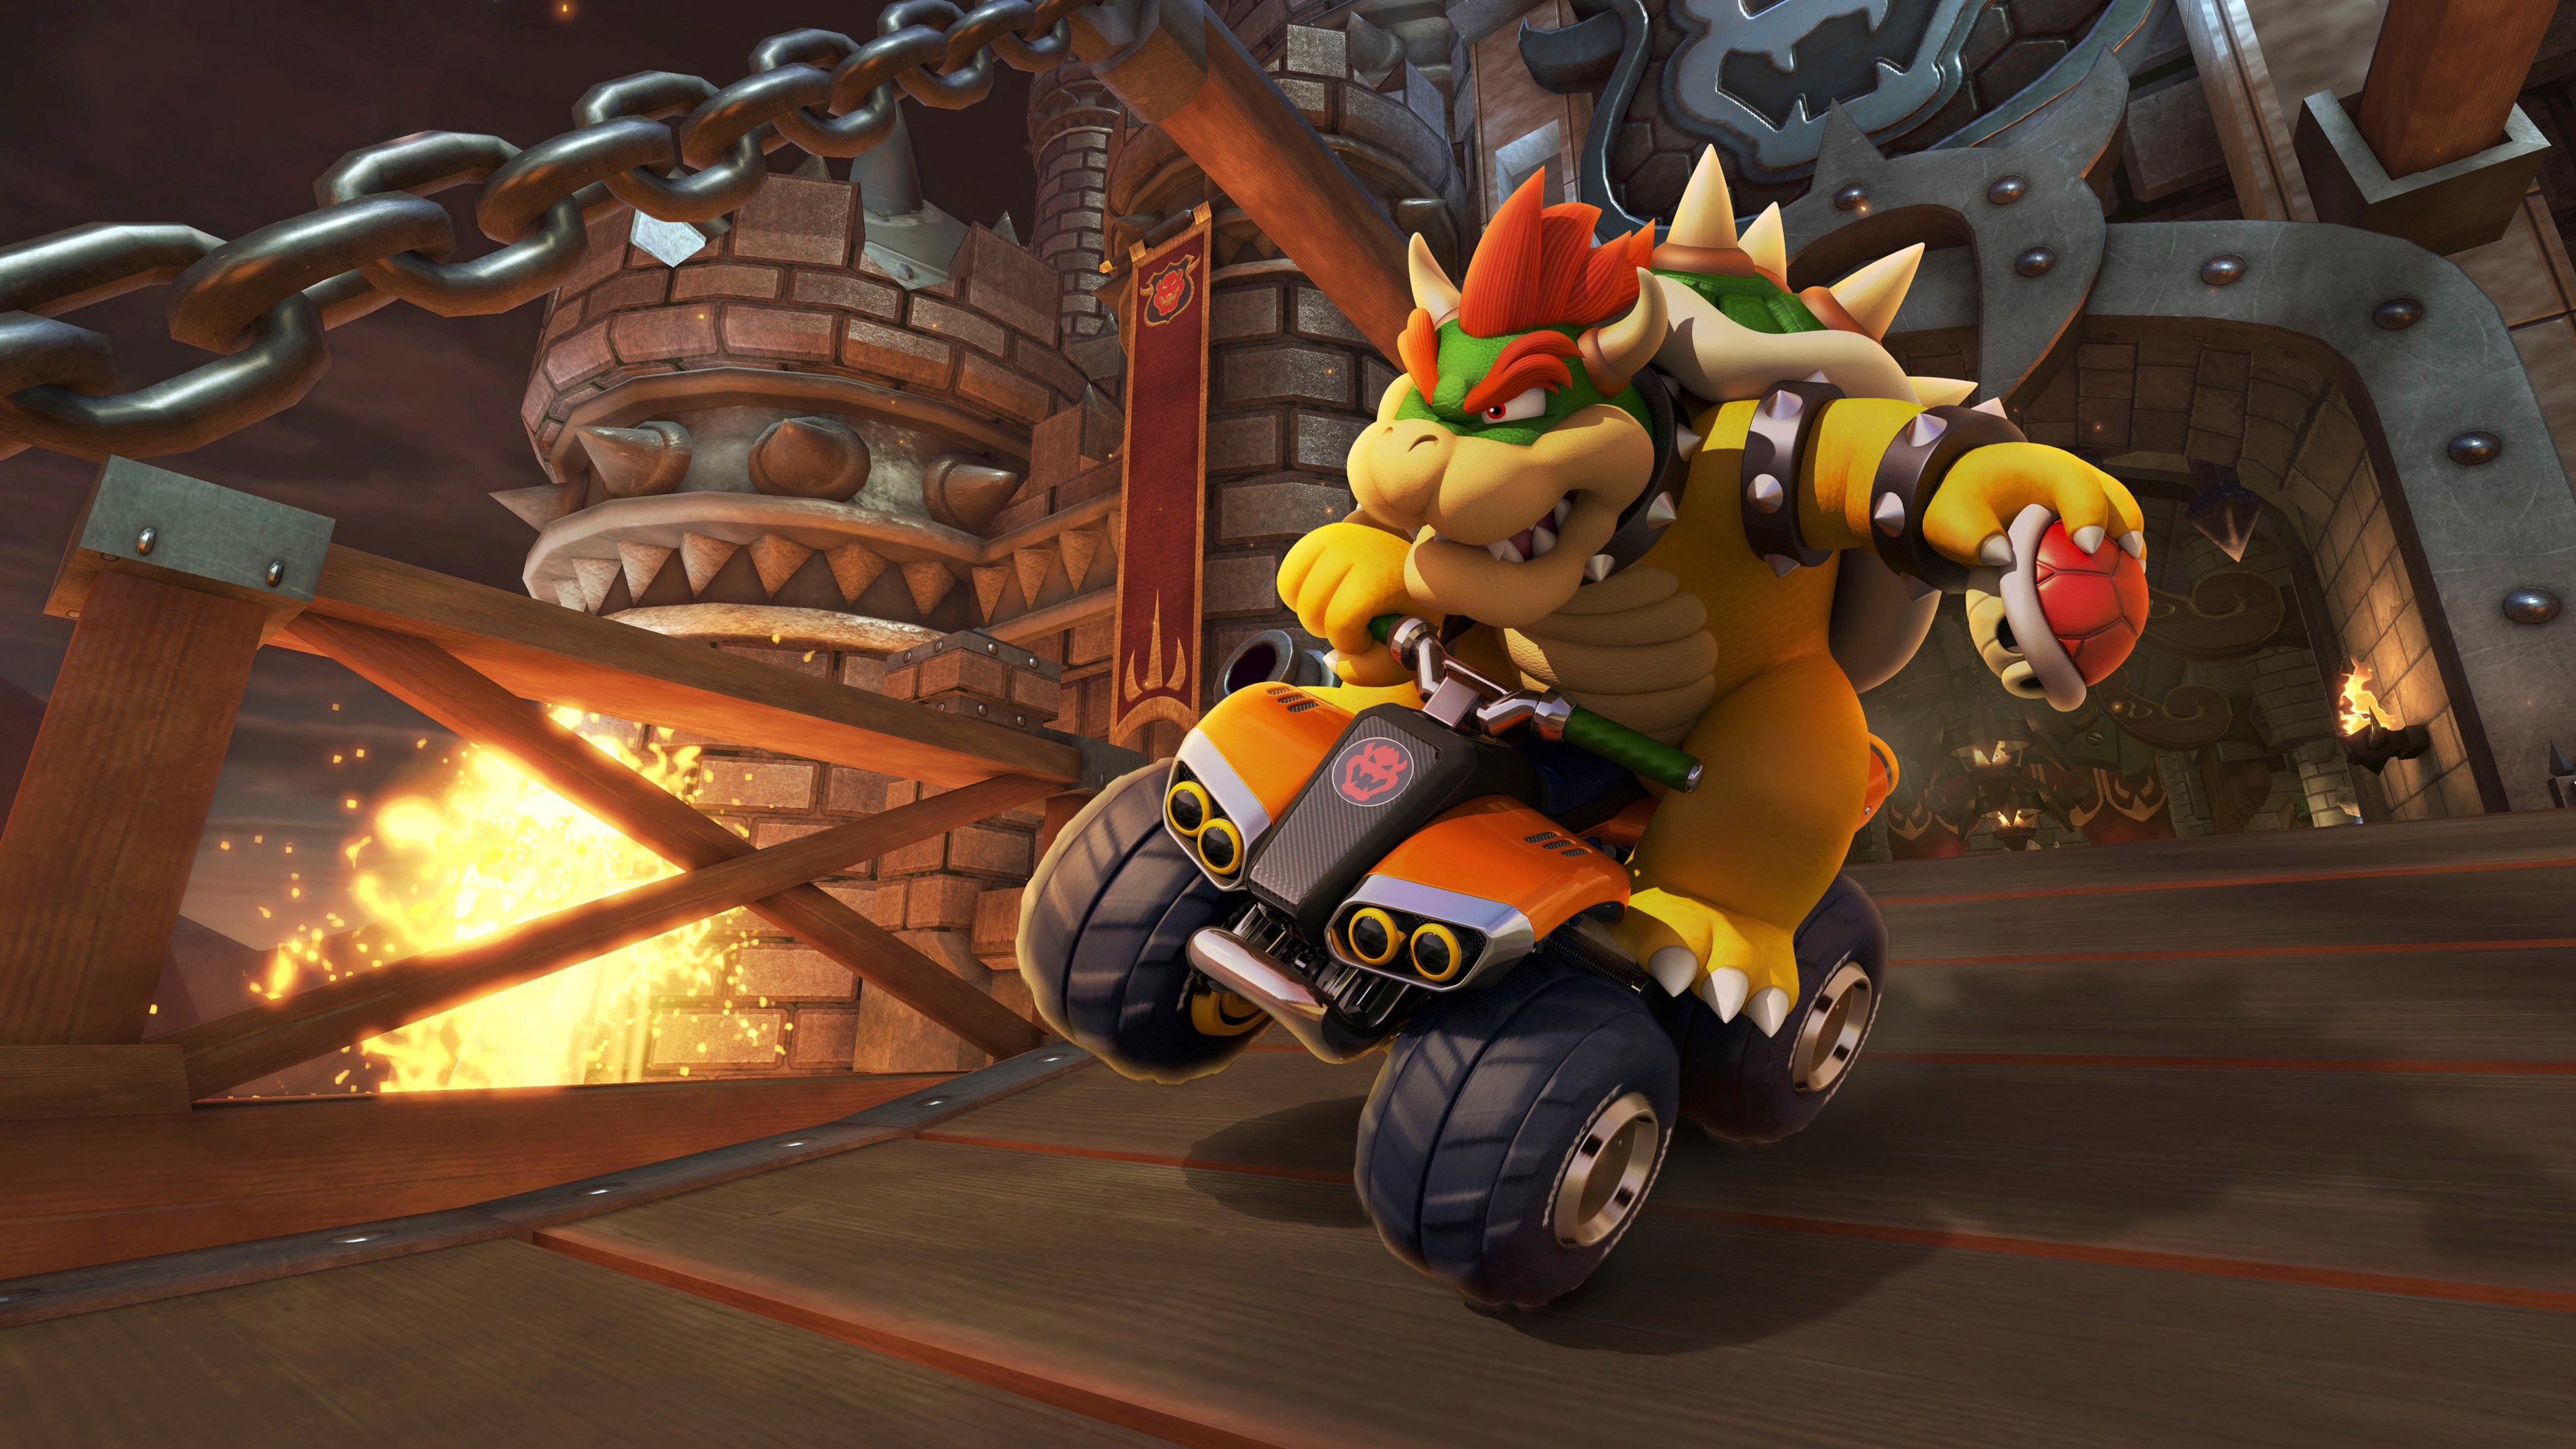 Nintendo Switch Mario Kart 8 Deluxe Bundle (Full Game Download + 3